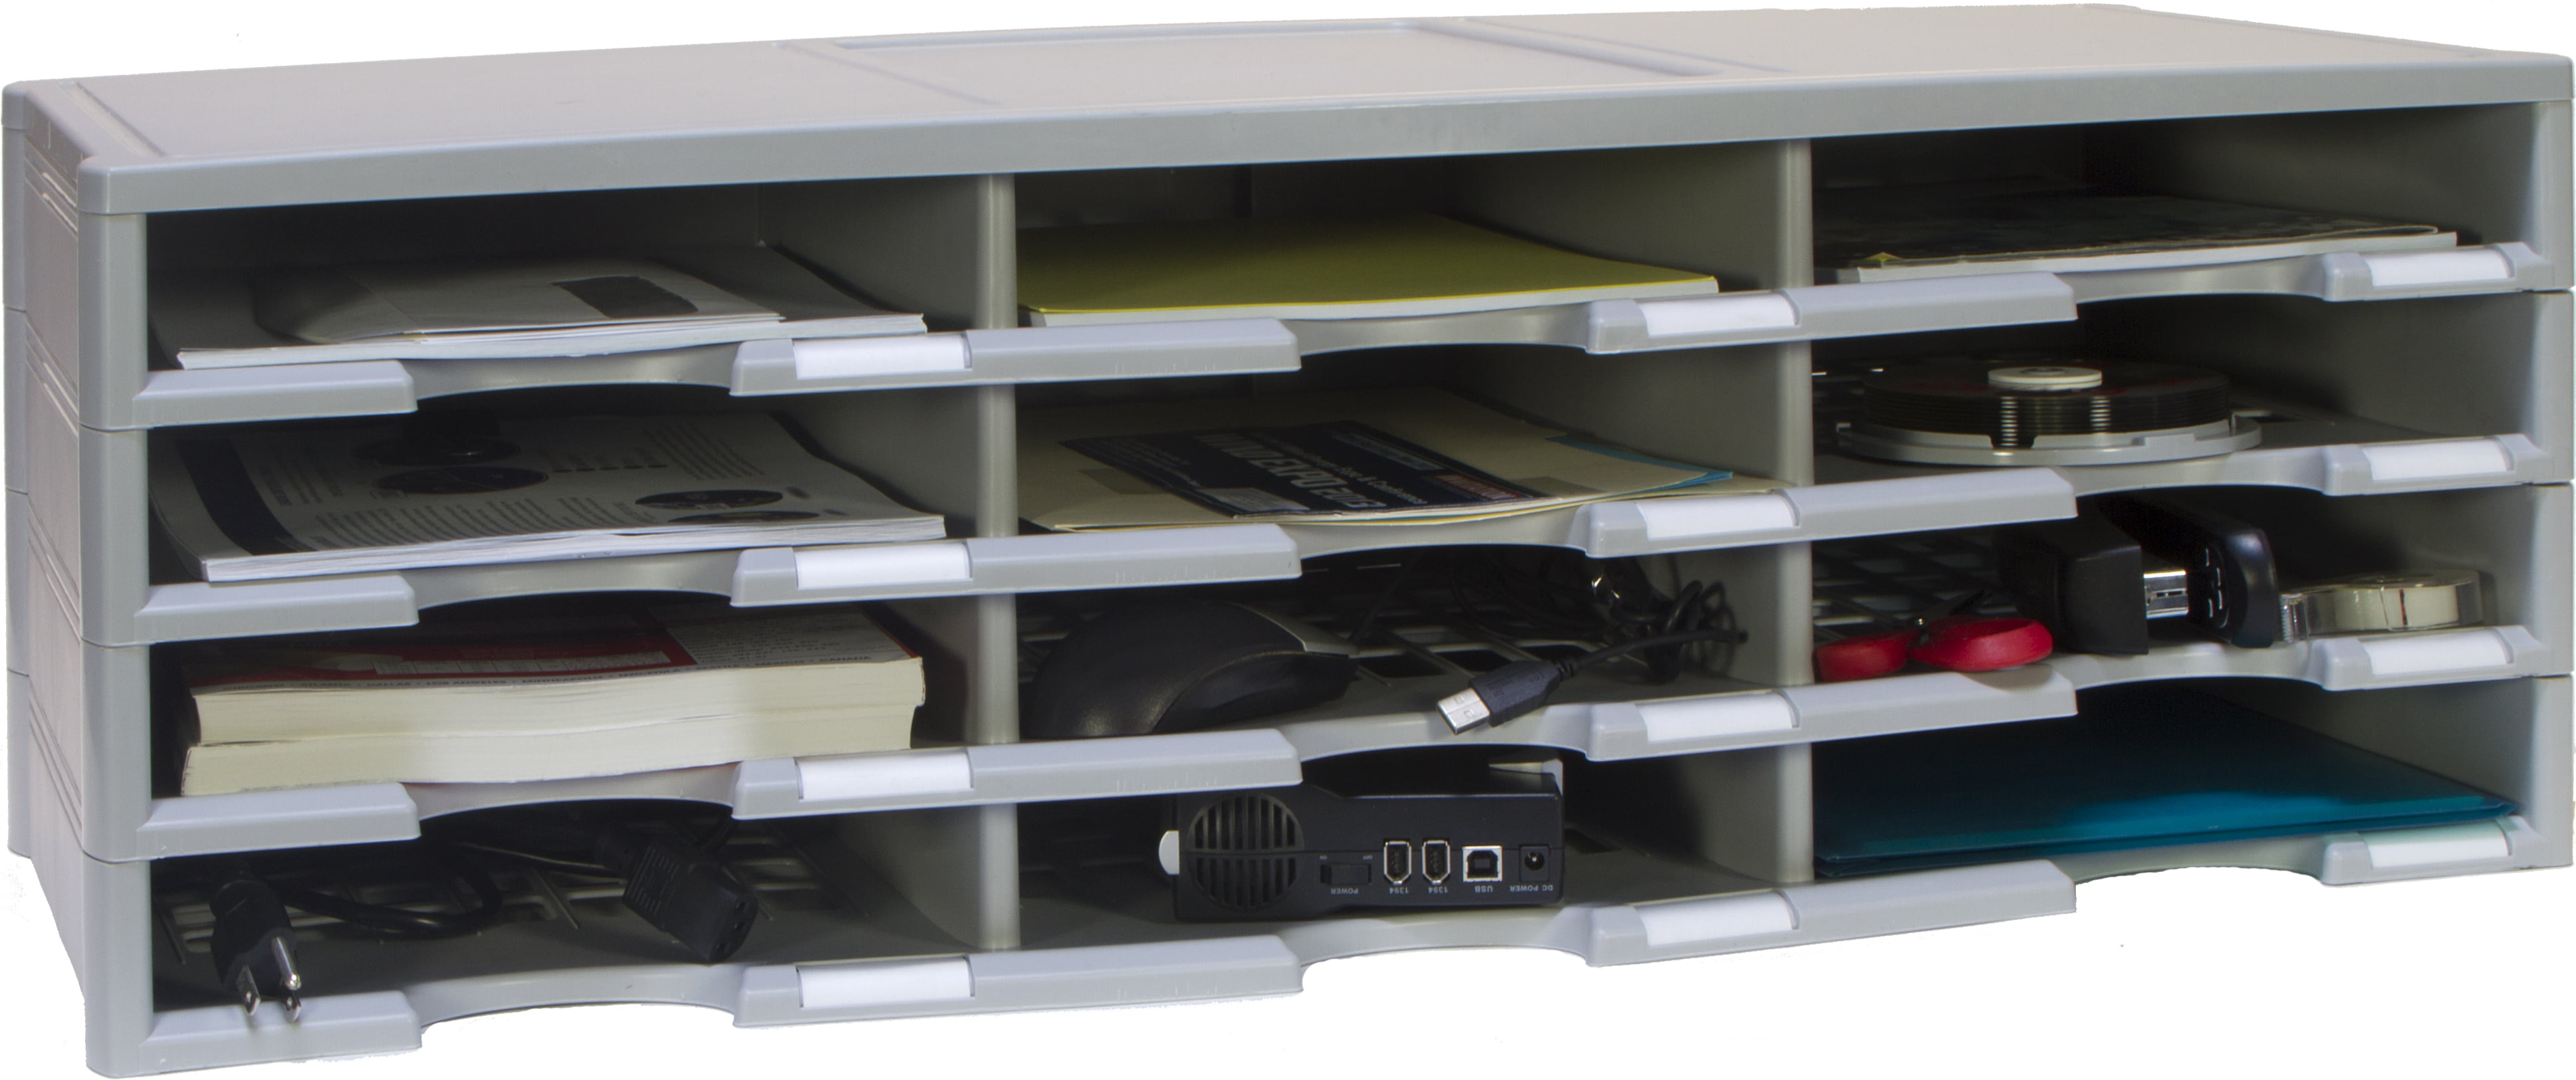 Storex Plastic 12-Compartment Countertop Literature Organizer